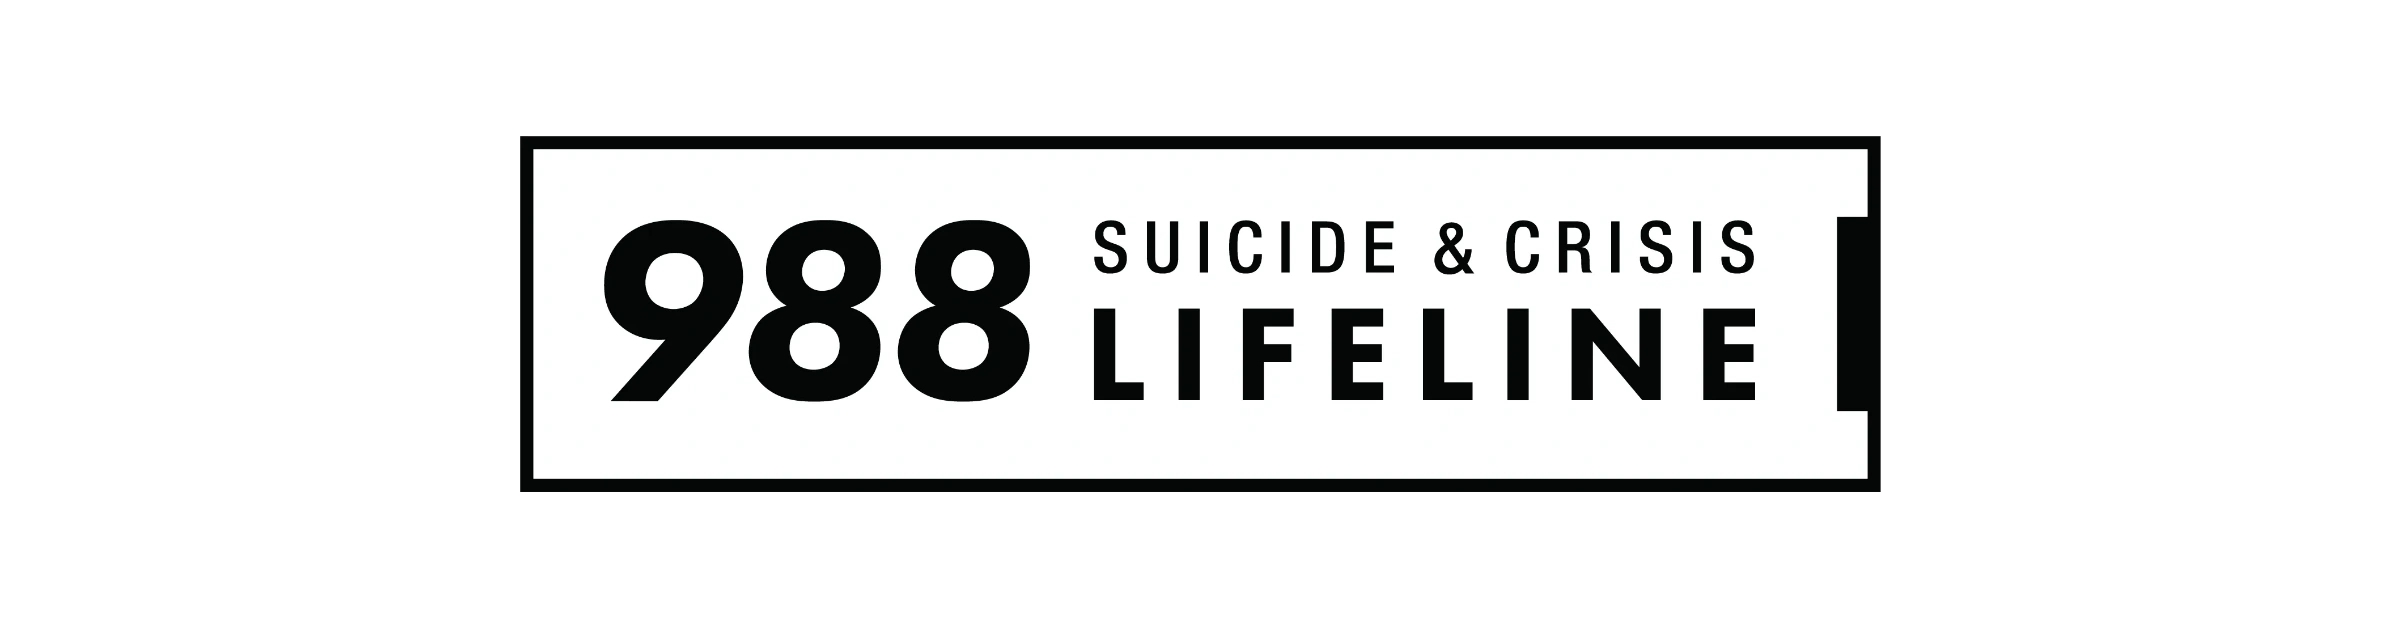 #988 suicide and crisis lifeline